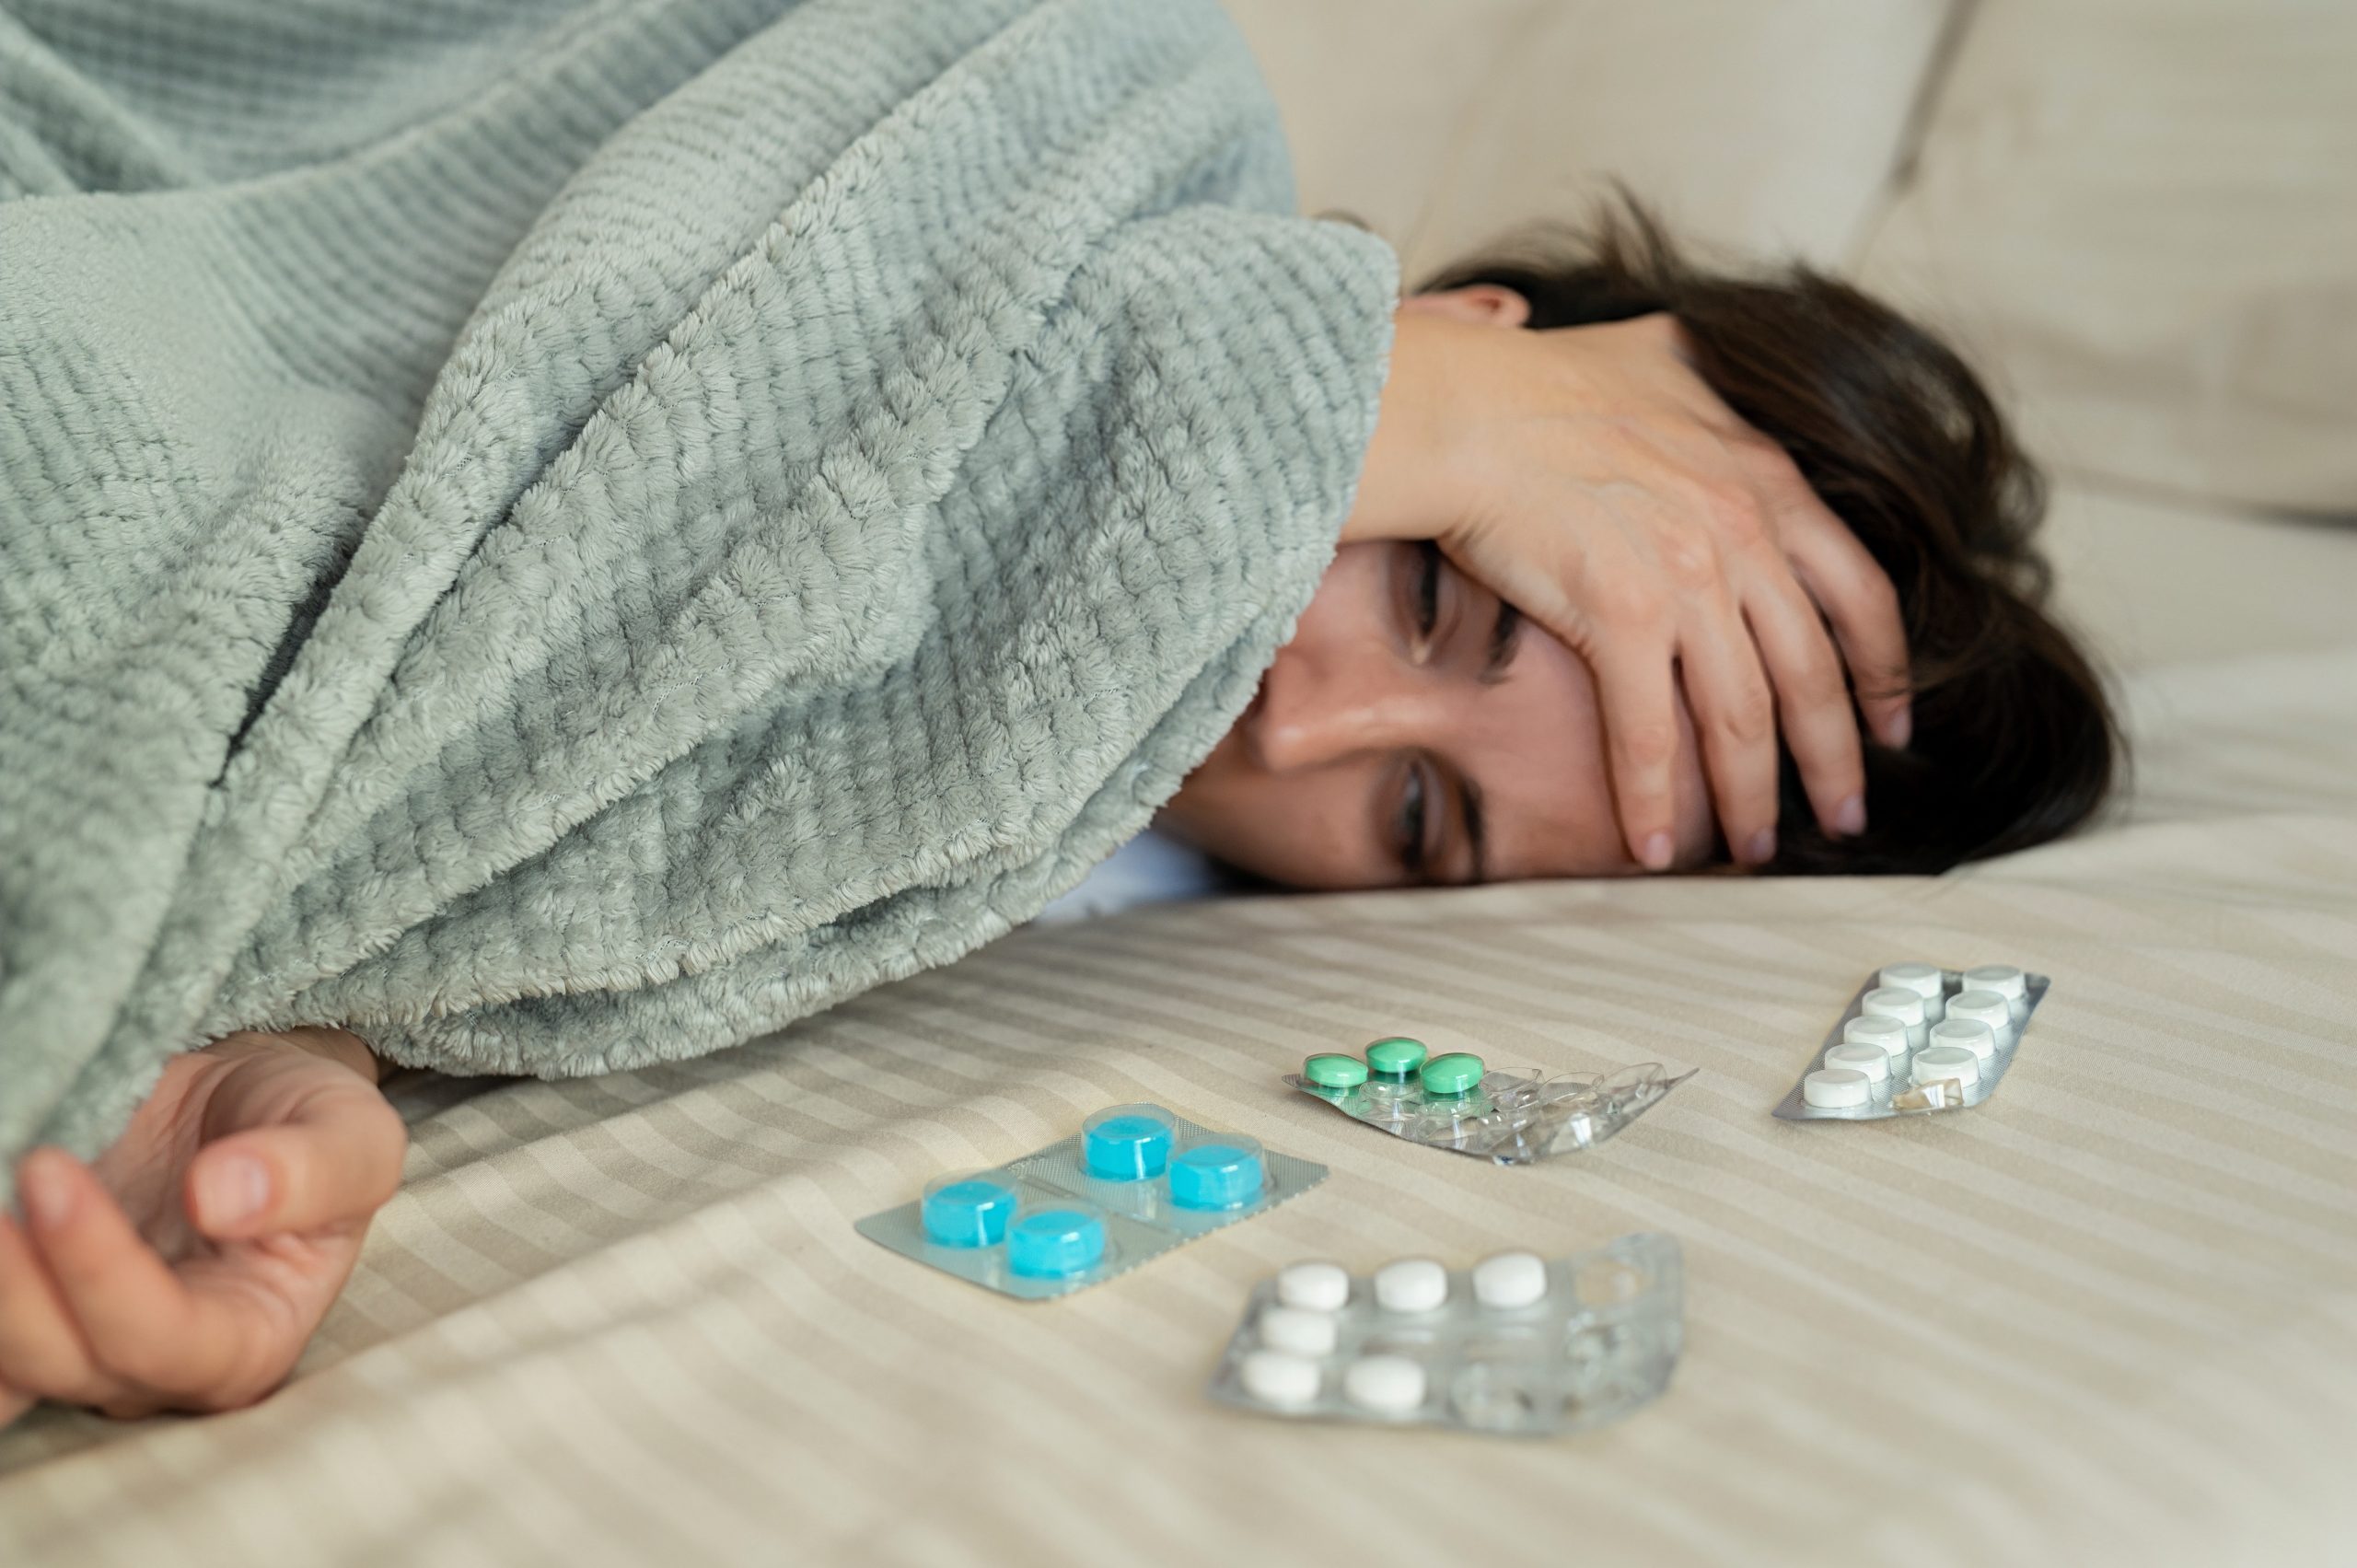 Sleeping pill overdose